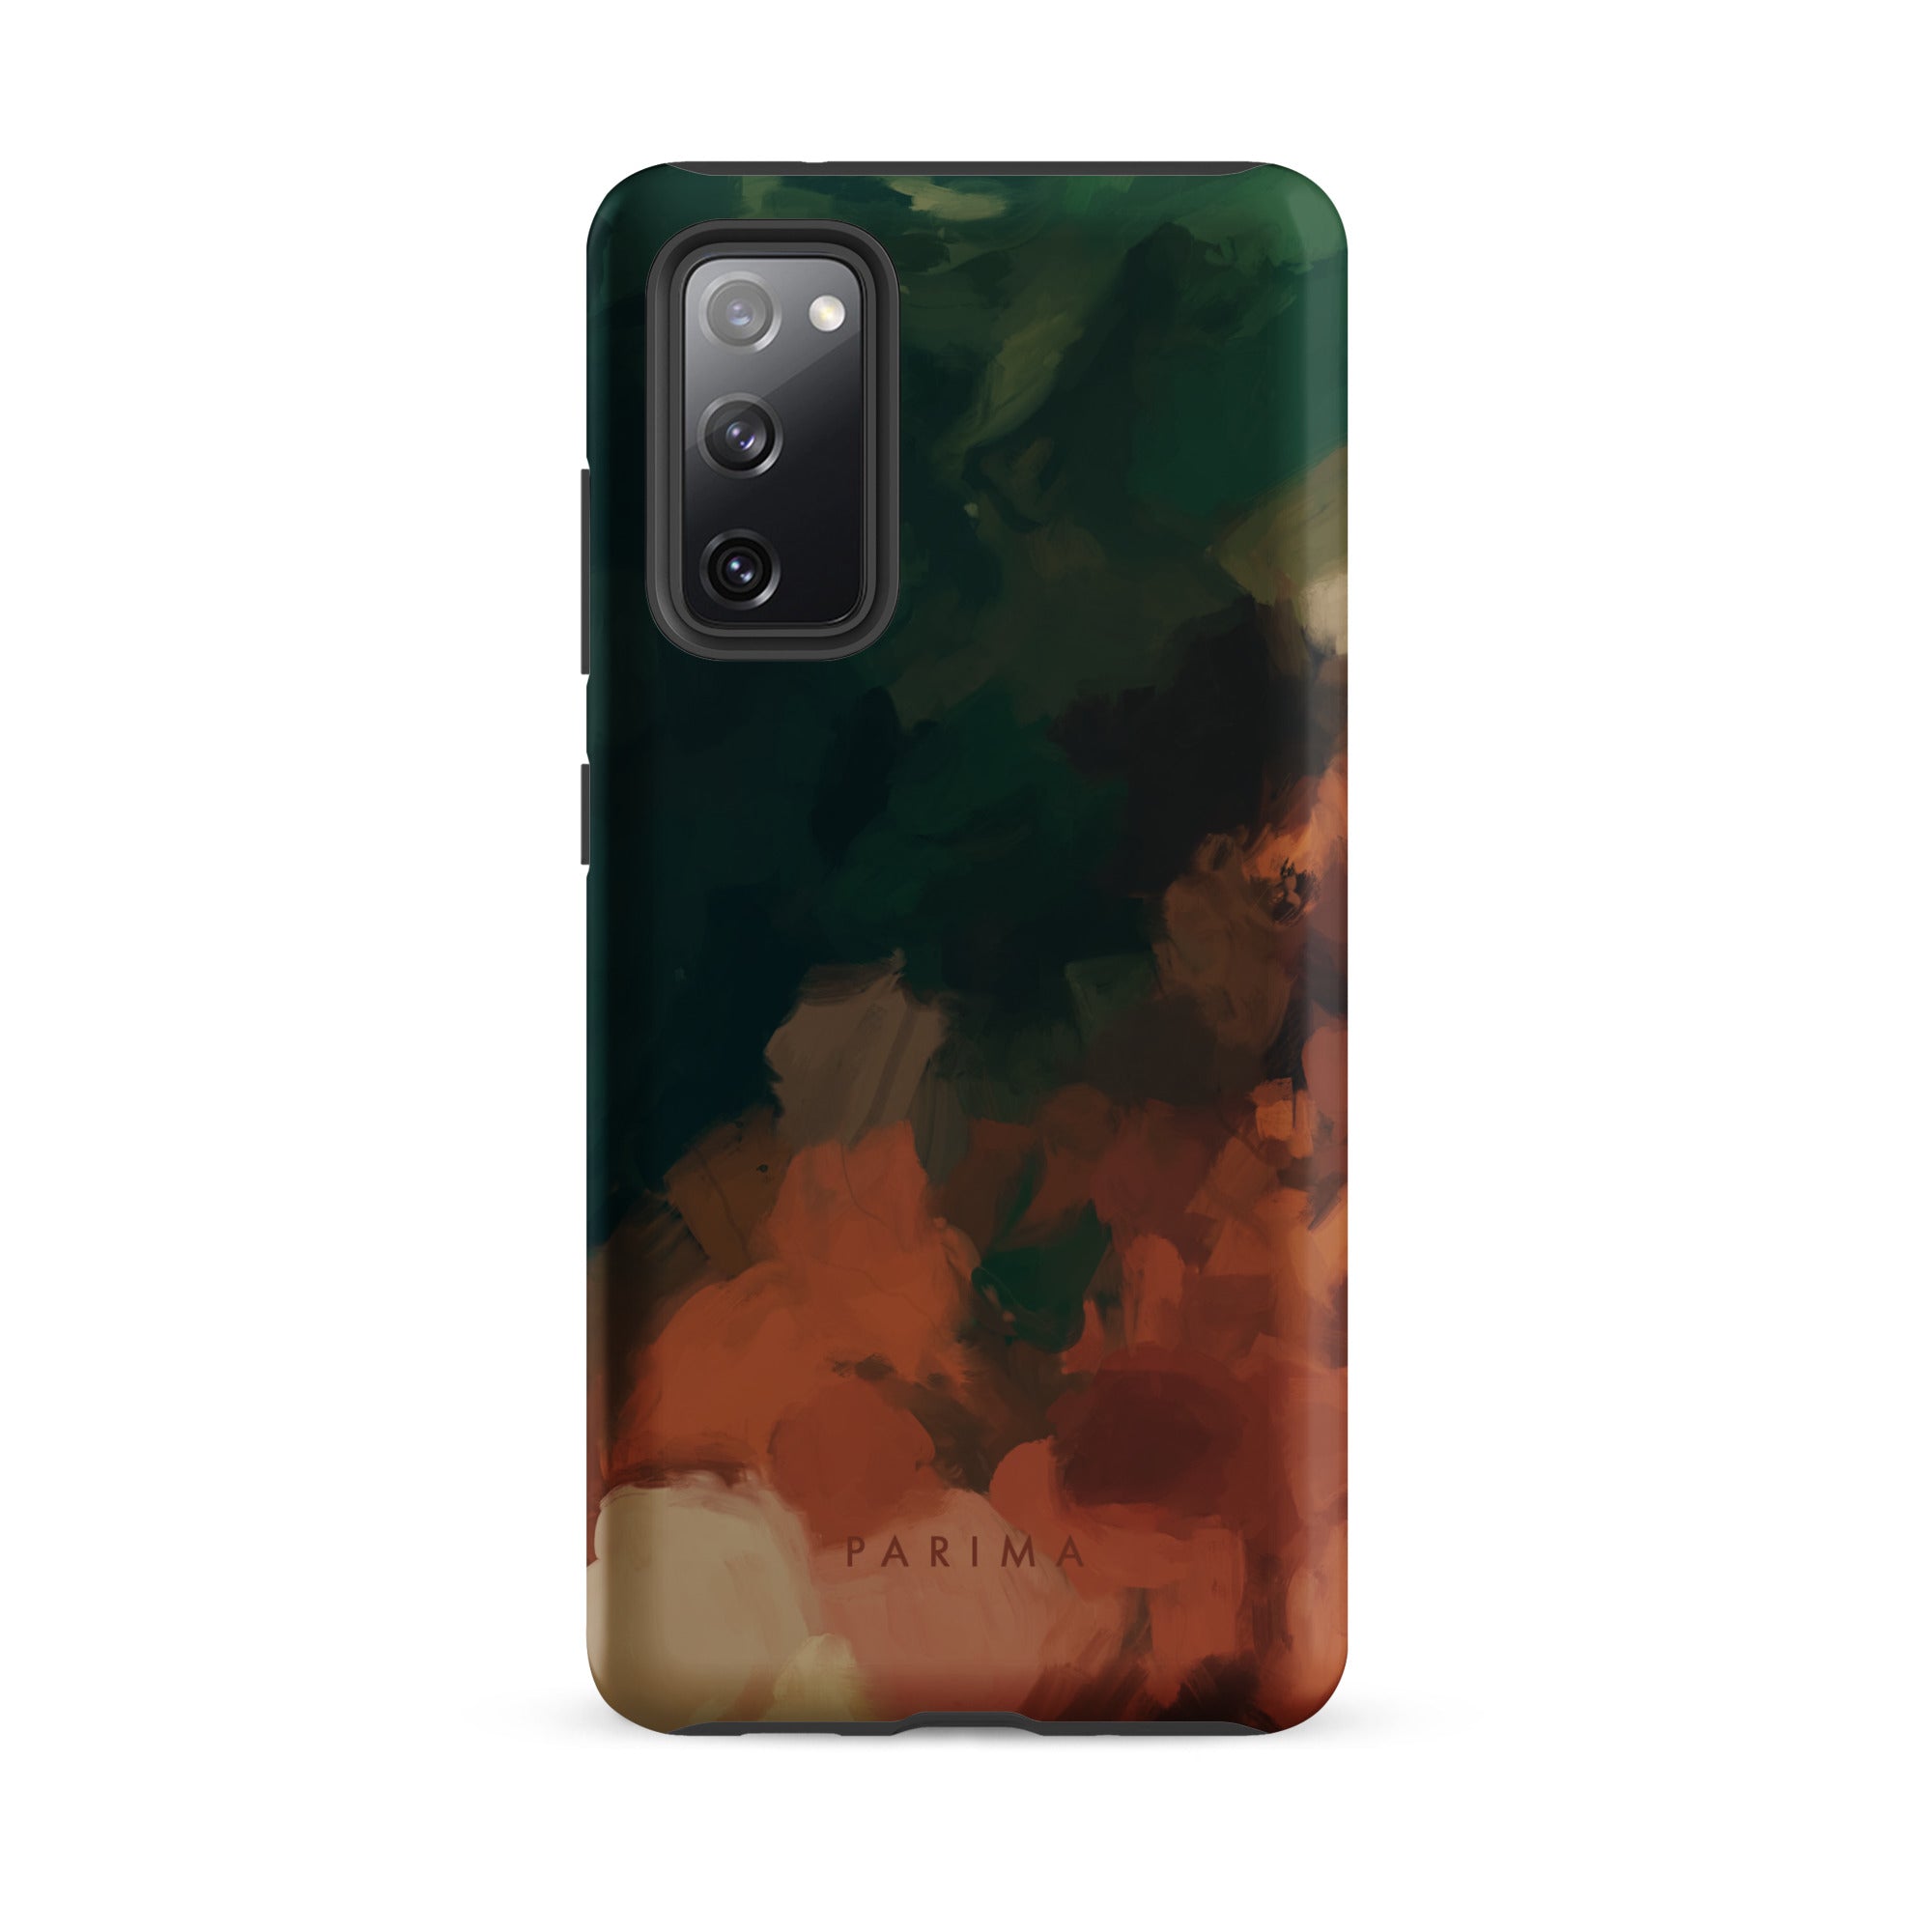 Cedar, green and brown abstract art on Samsung Galaxy S20 fe tough case by Parima Studio